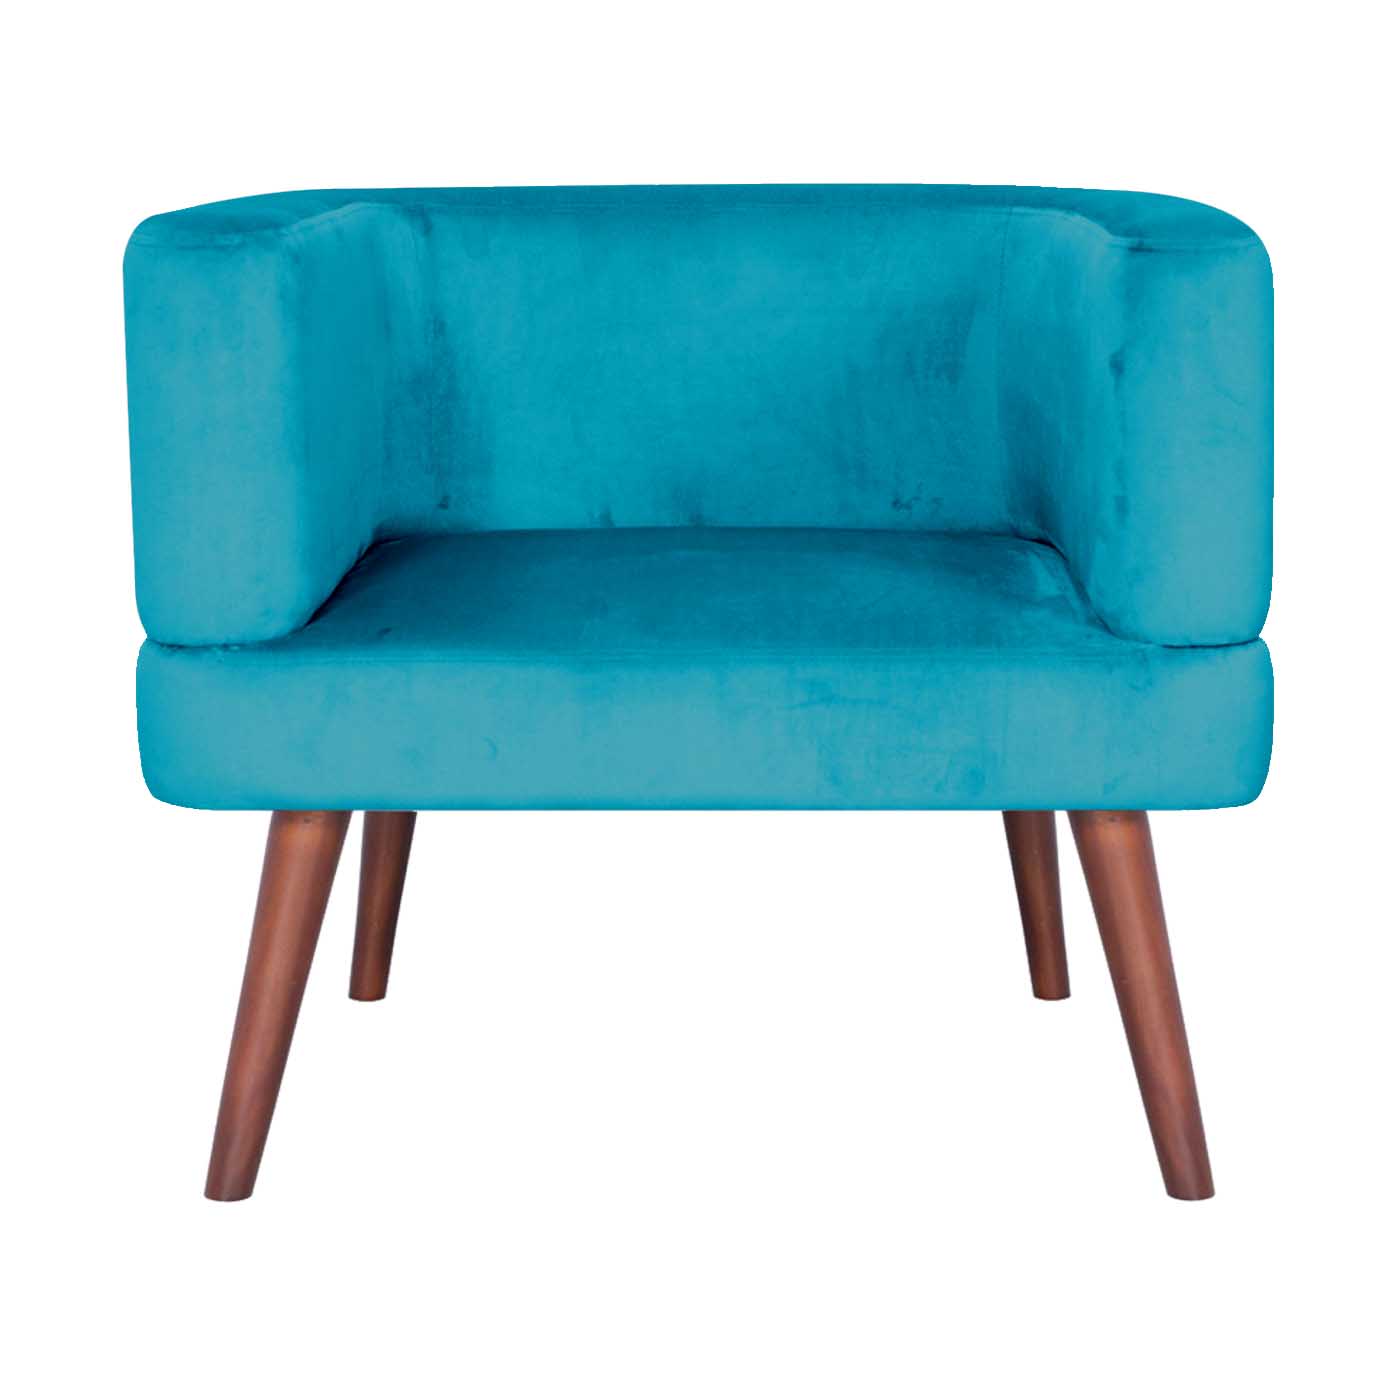 Dalian Turquoise Dark Single Sofa